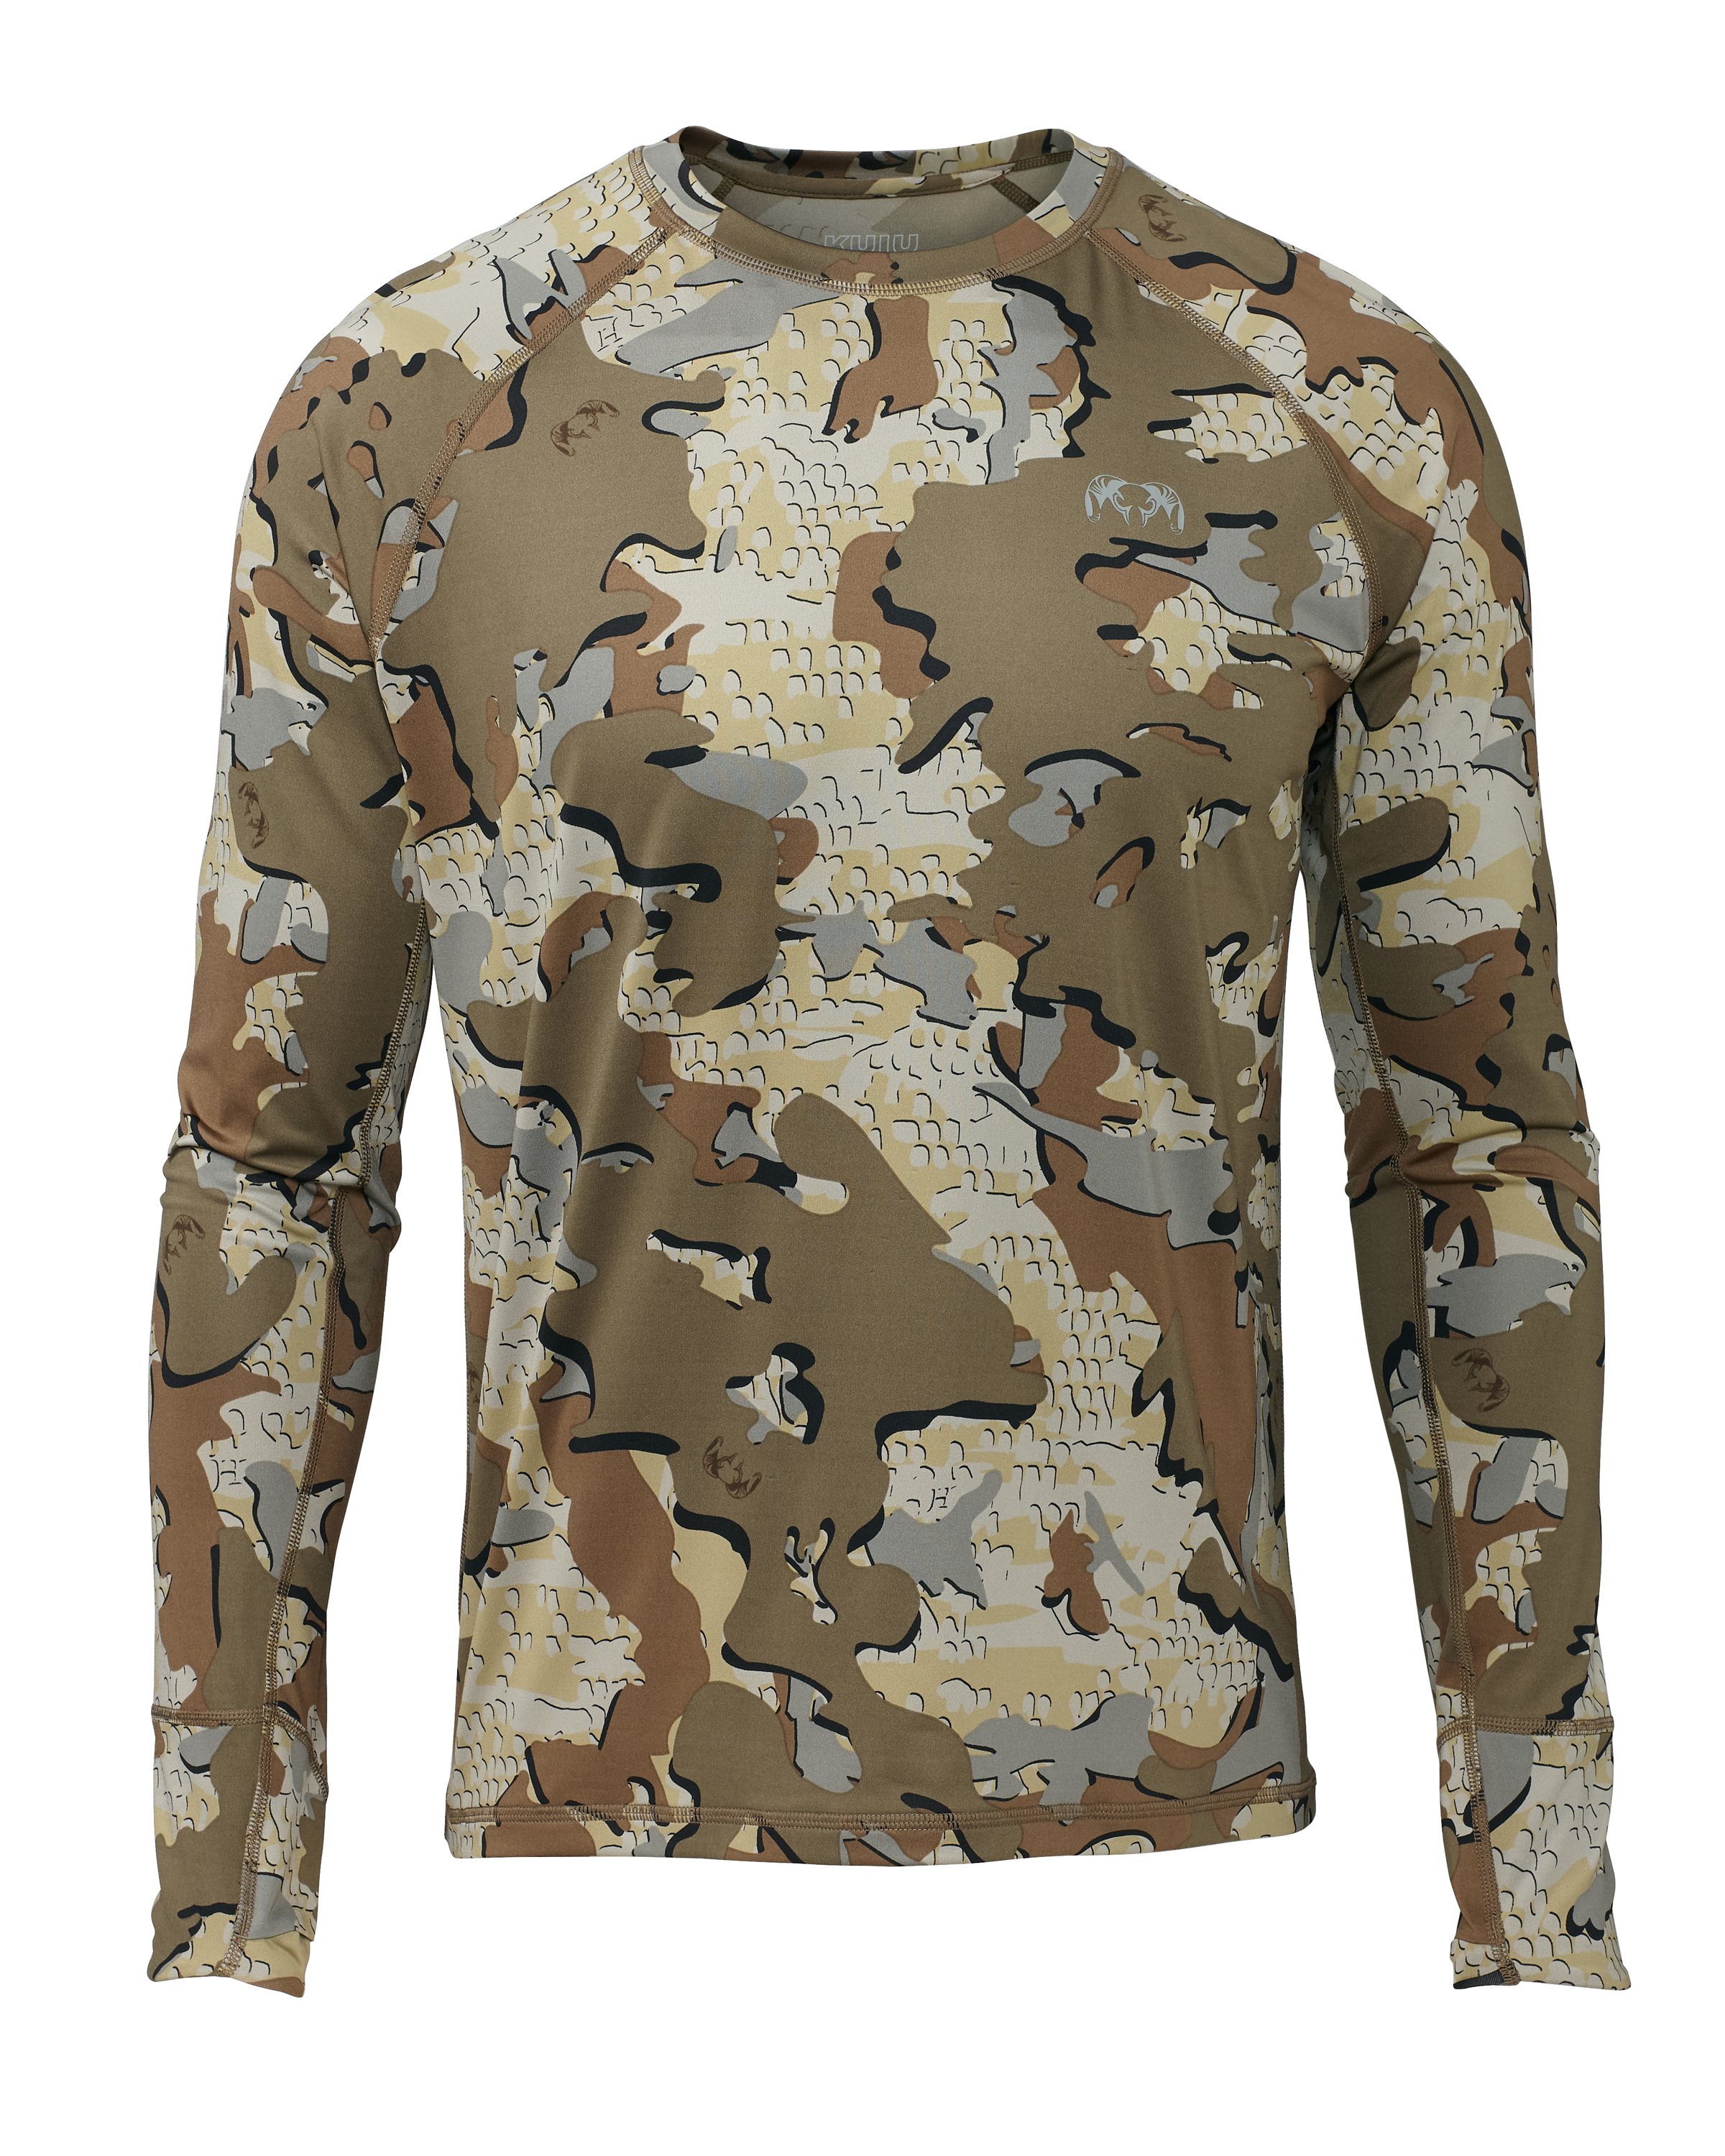 KUIU Gila Long Sleeves Crew Hunting Shirt in Valo | Large